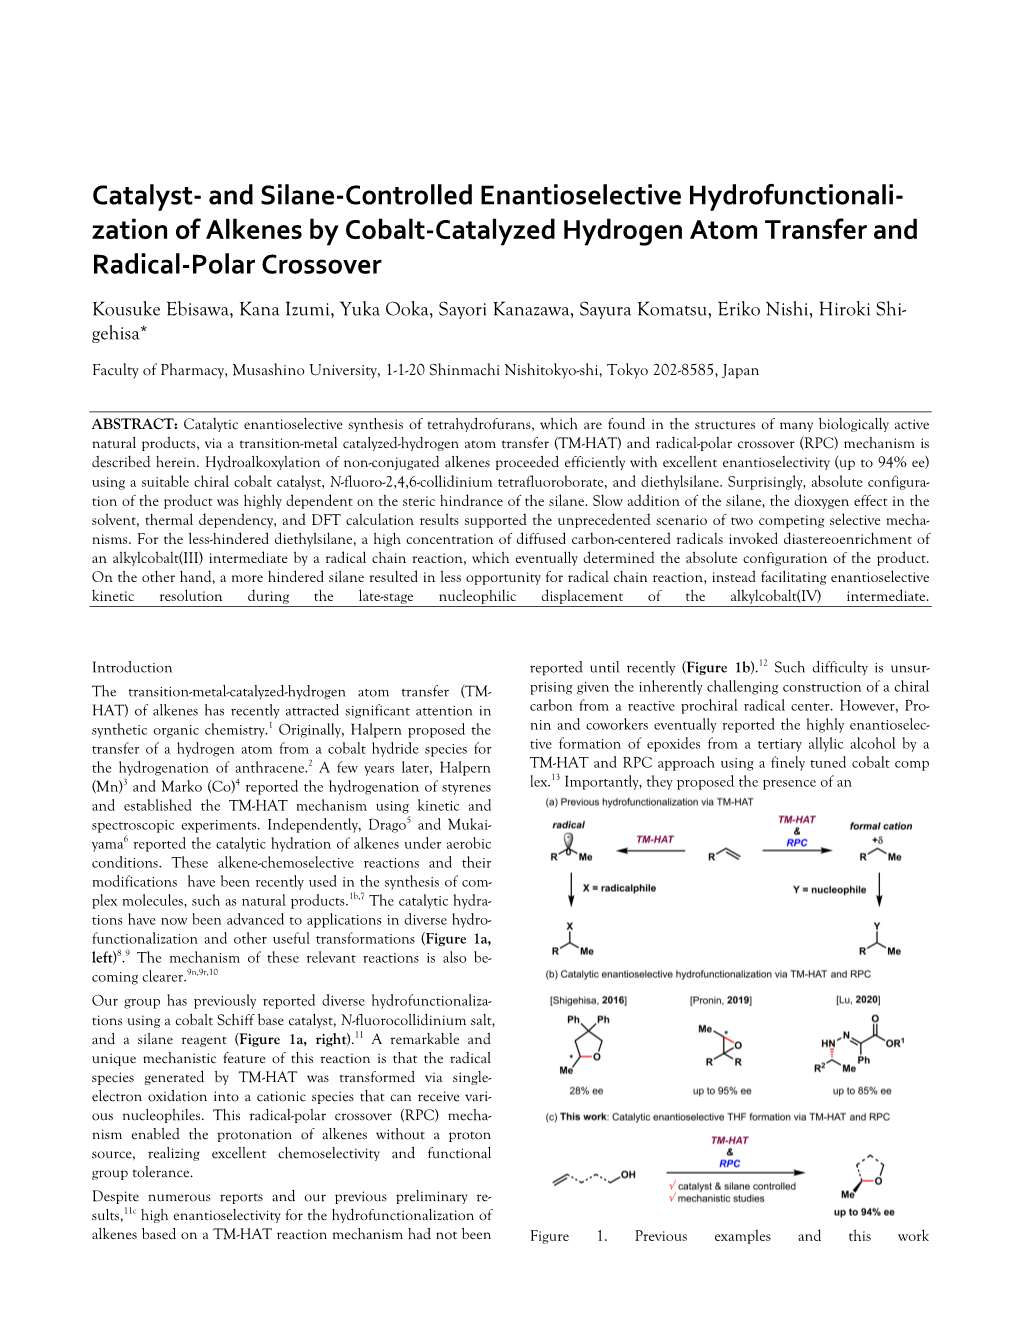 Zation of Alkenes by Cobalt-Catalyzed Hydrogen Atom Transfer and Radical-Polar Crossover